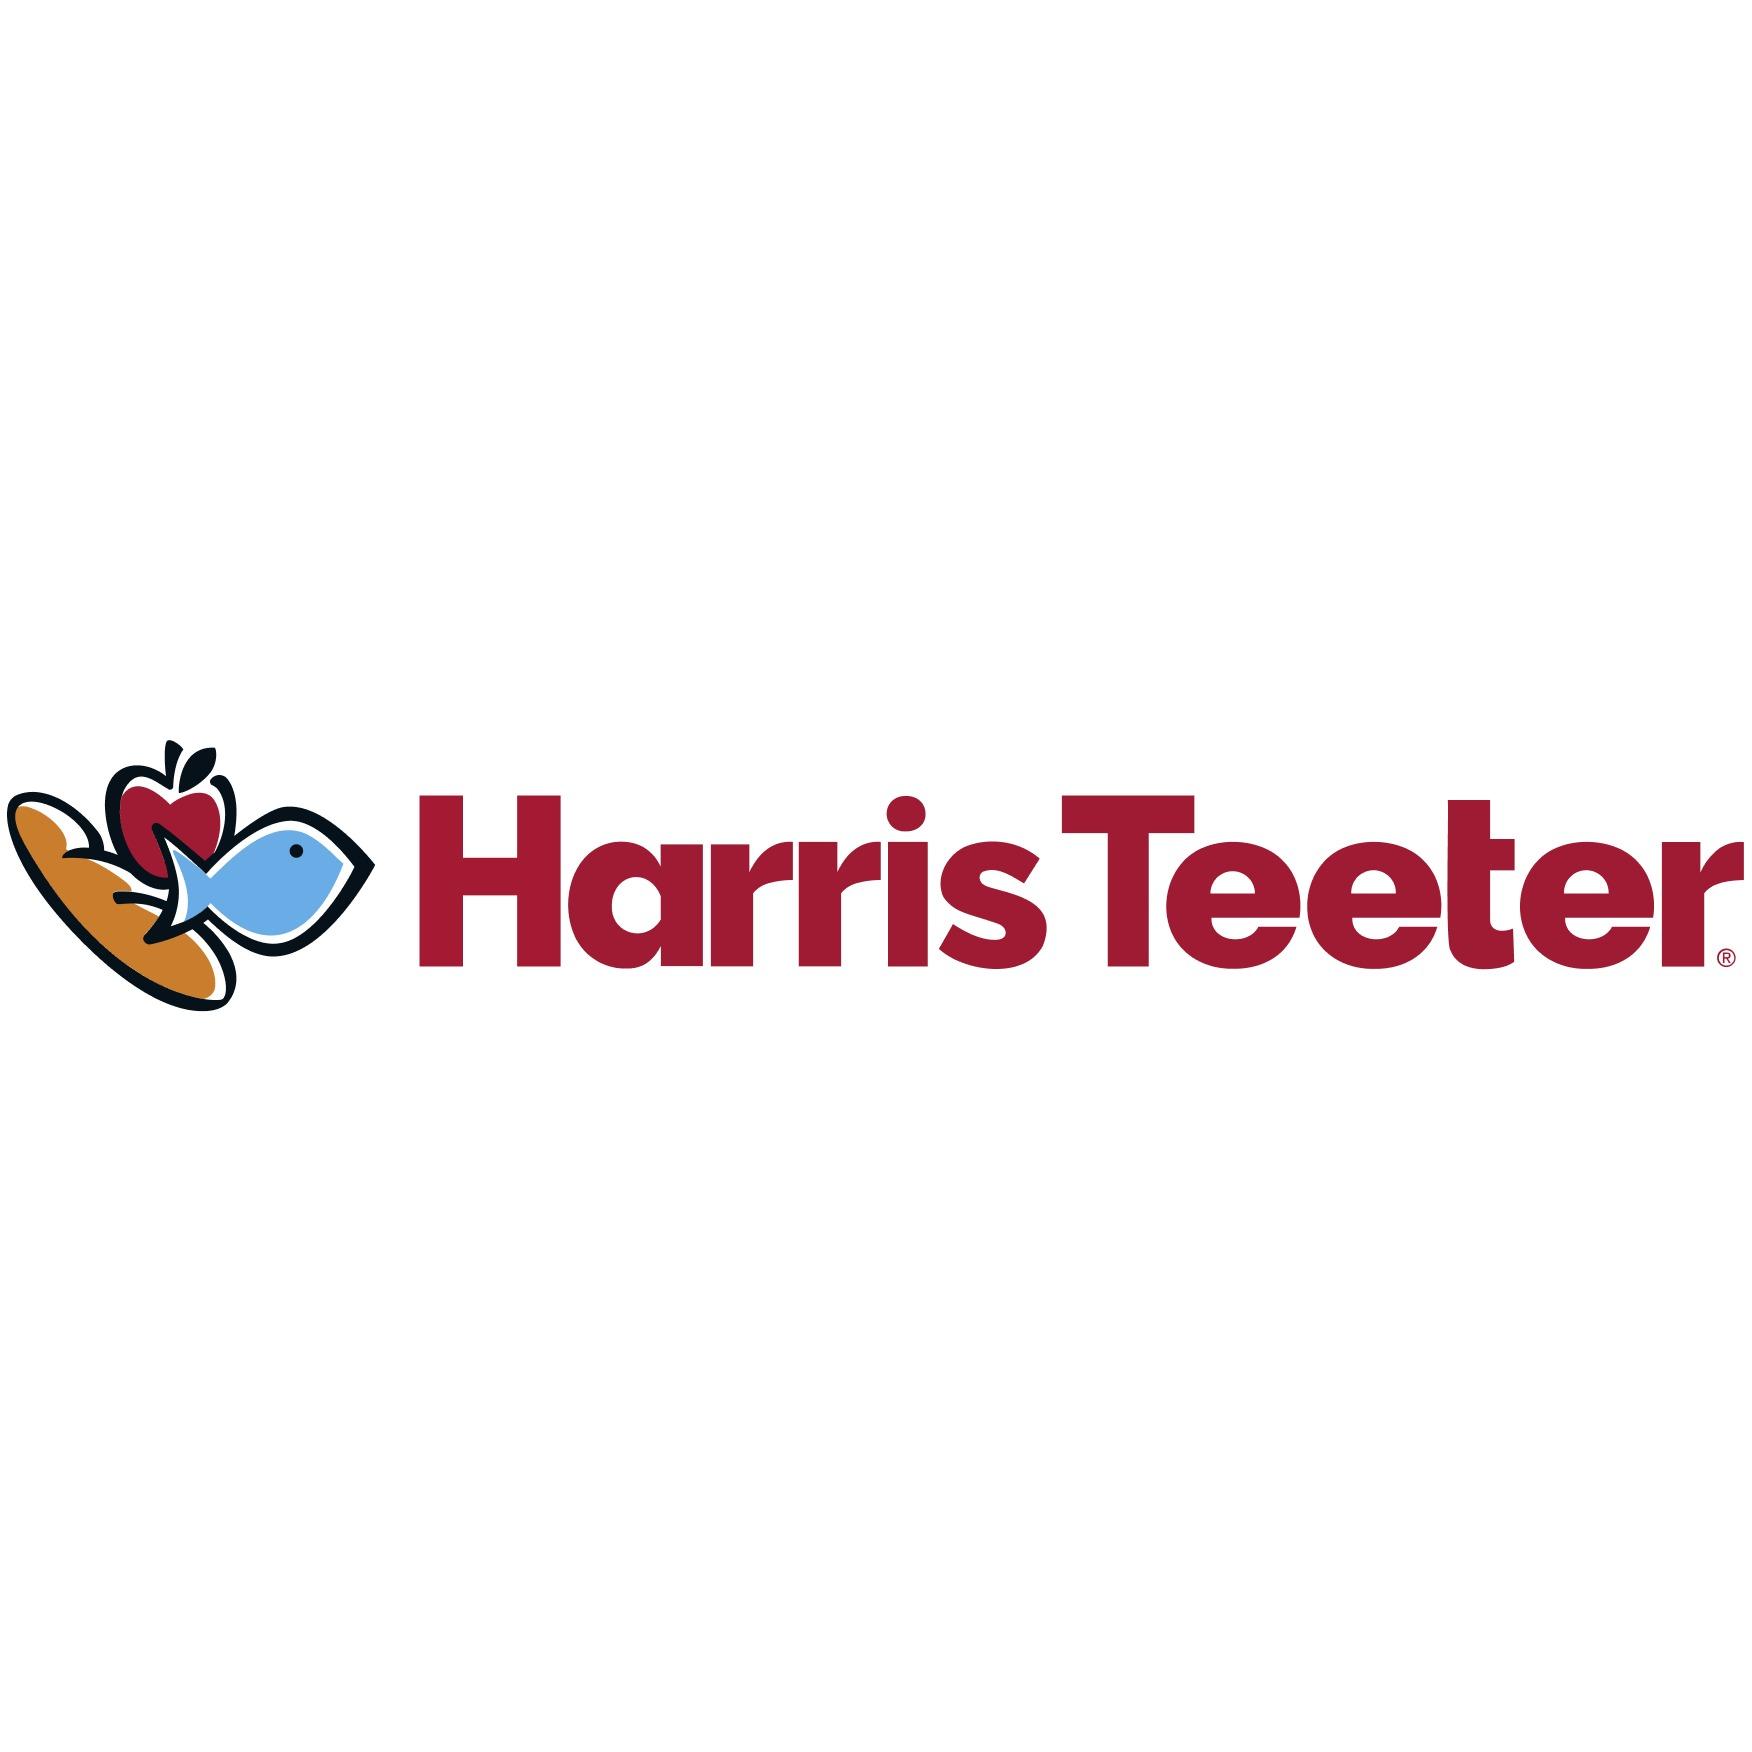 Harris Teeter - Greer, SC 29650 - (864)584-7301 | ShowMeLocal.com